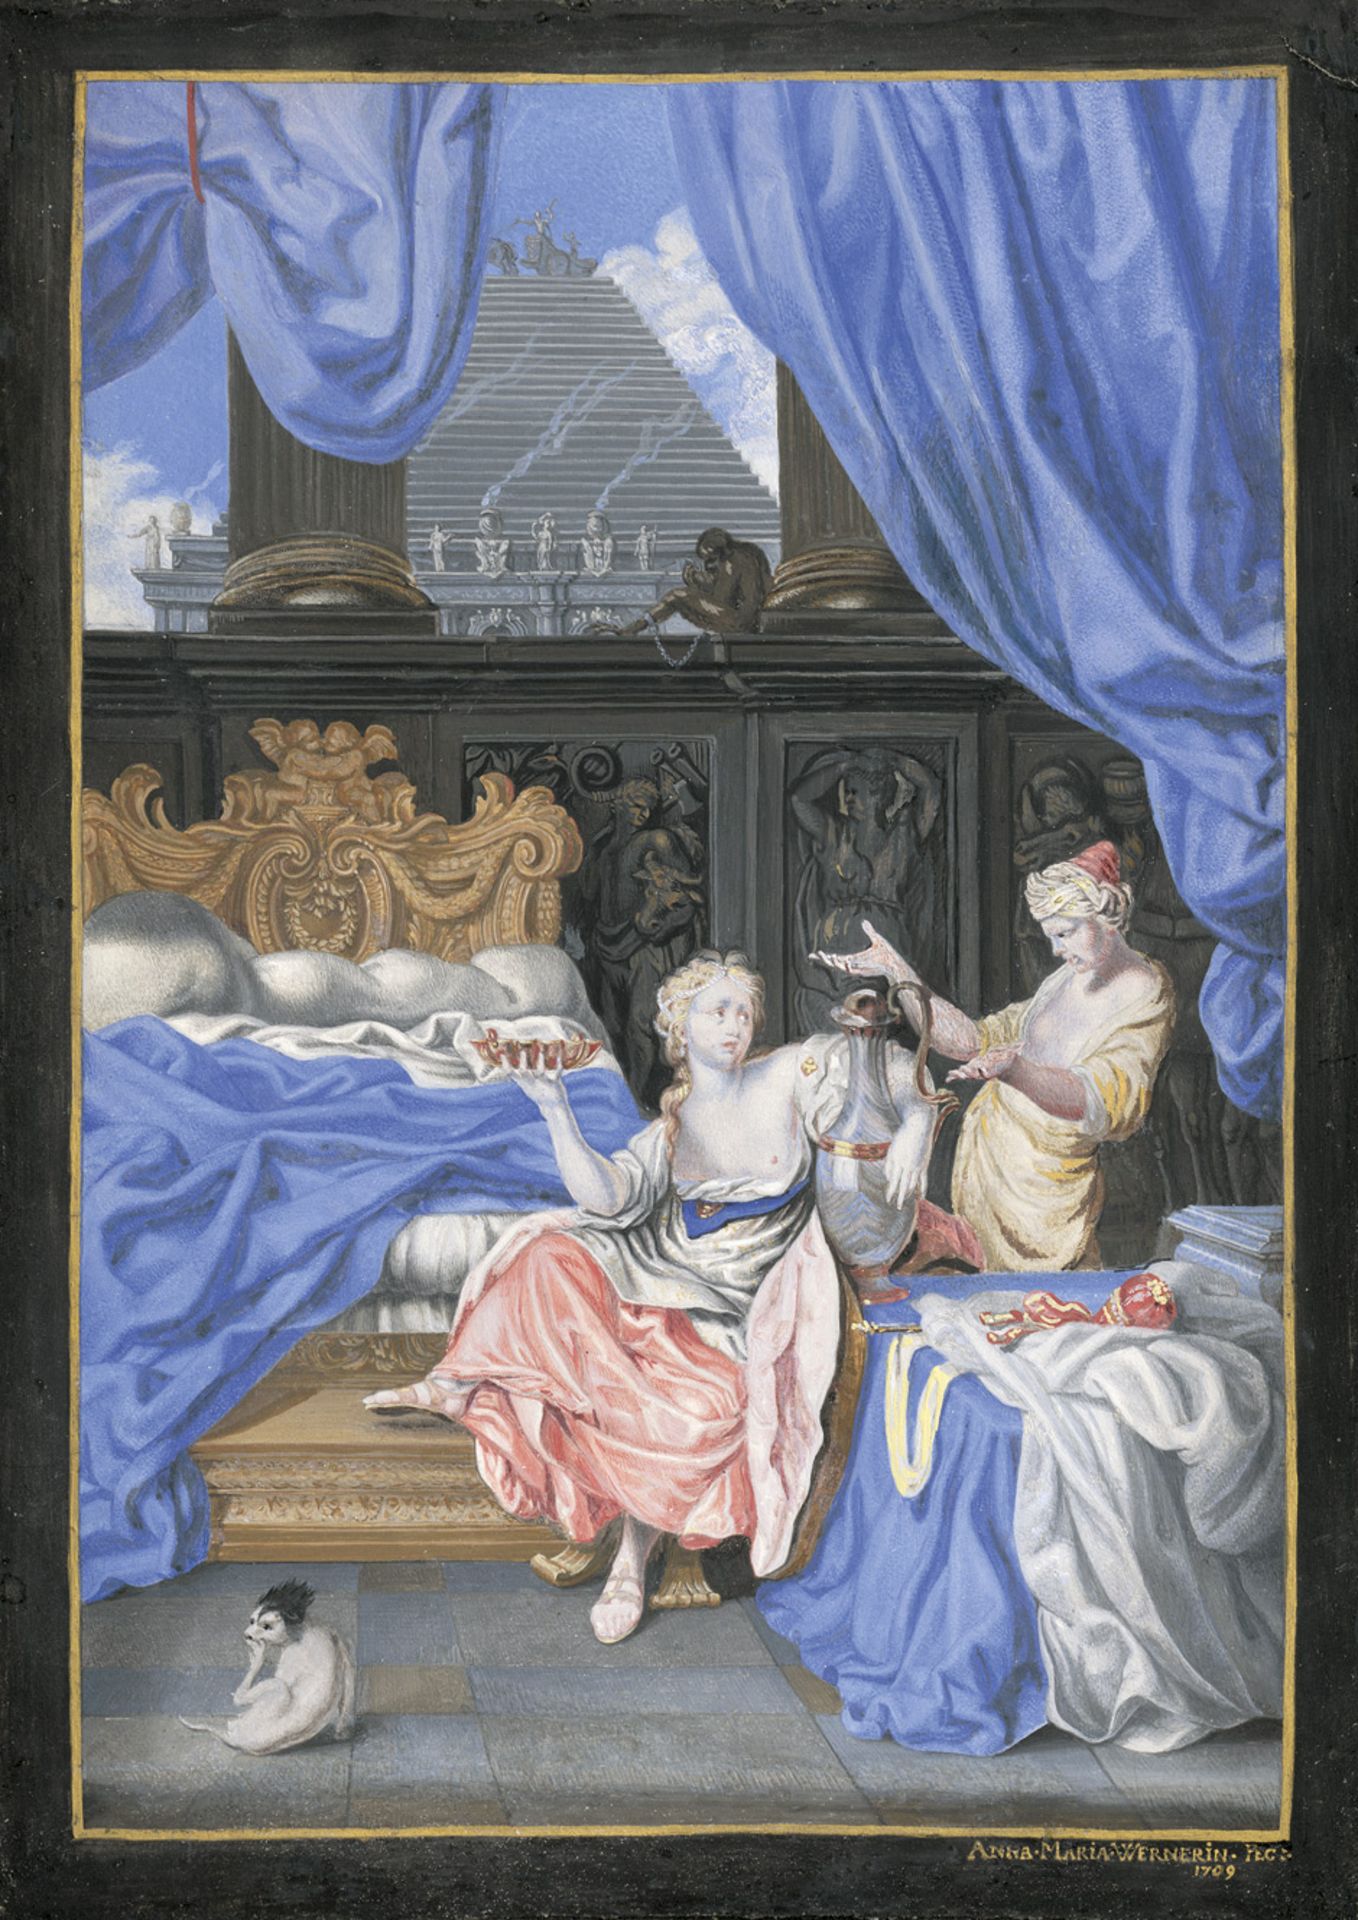 Werner, Anna Maria: Mausolus und Artemisia Mausolus und Artemisia. Gouache auf Pergament, mit